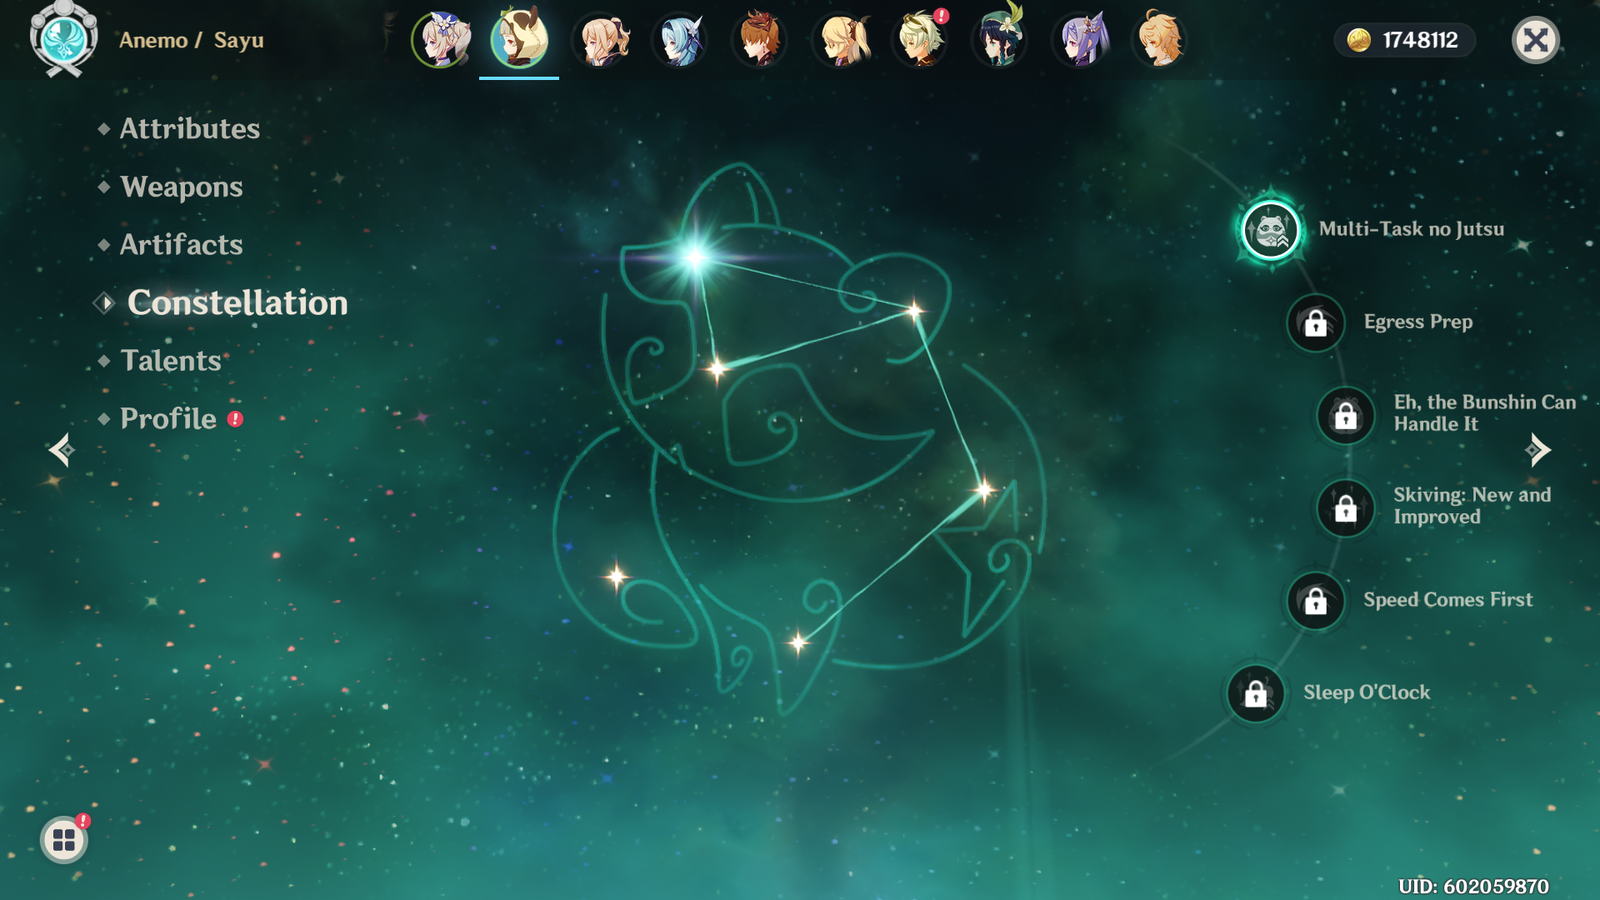 Sayu's Constellation screen